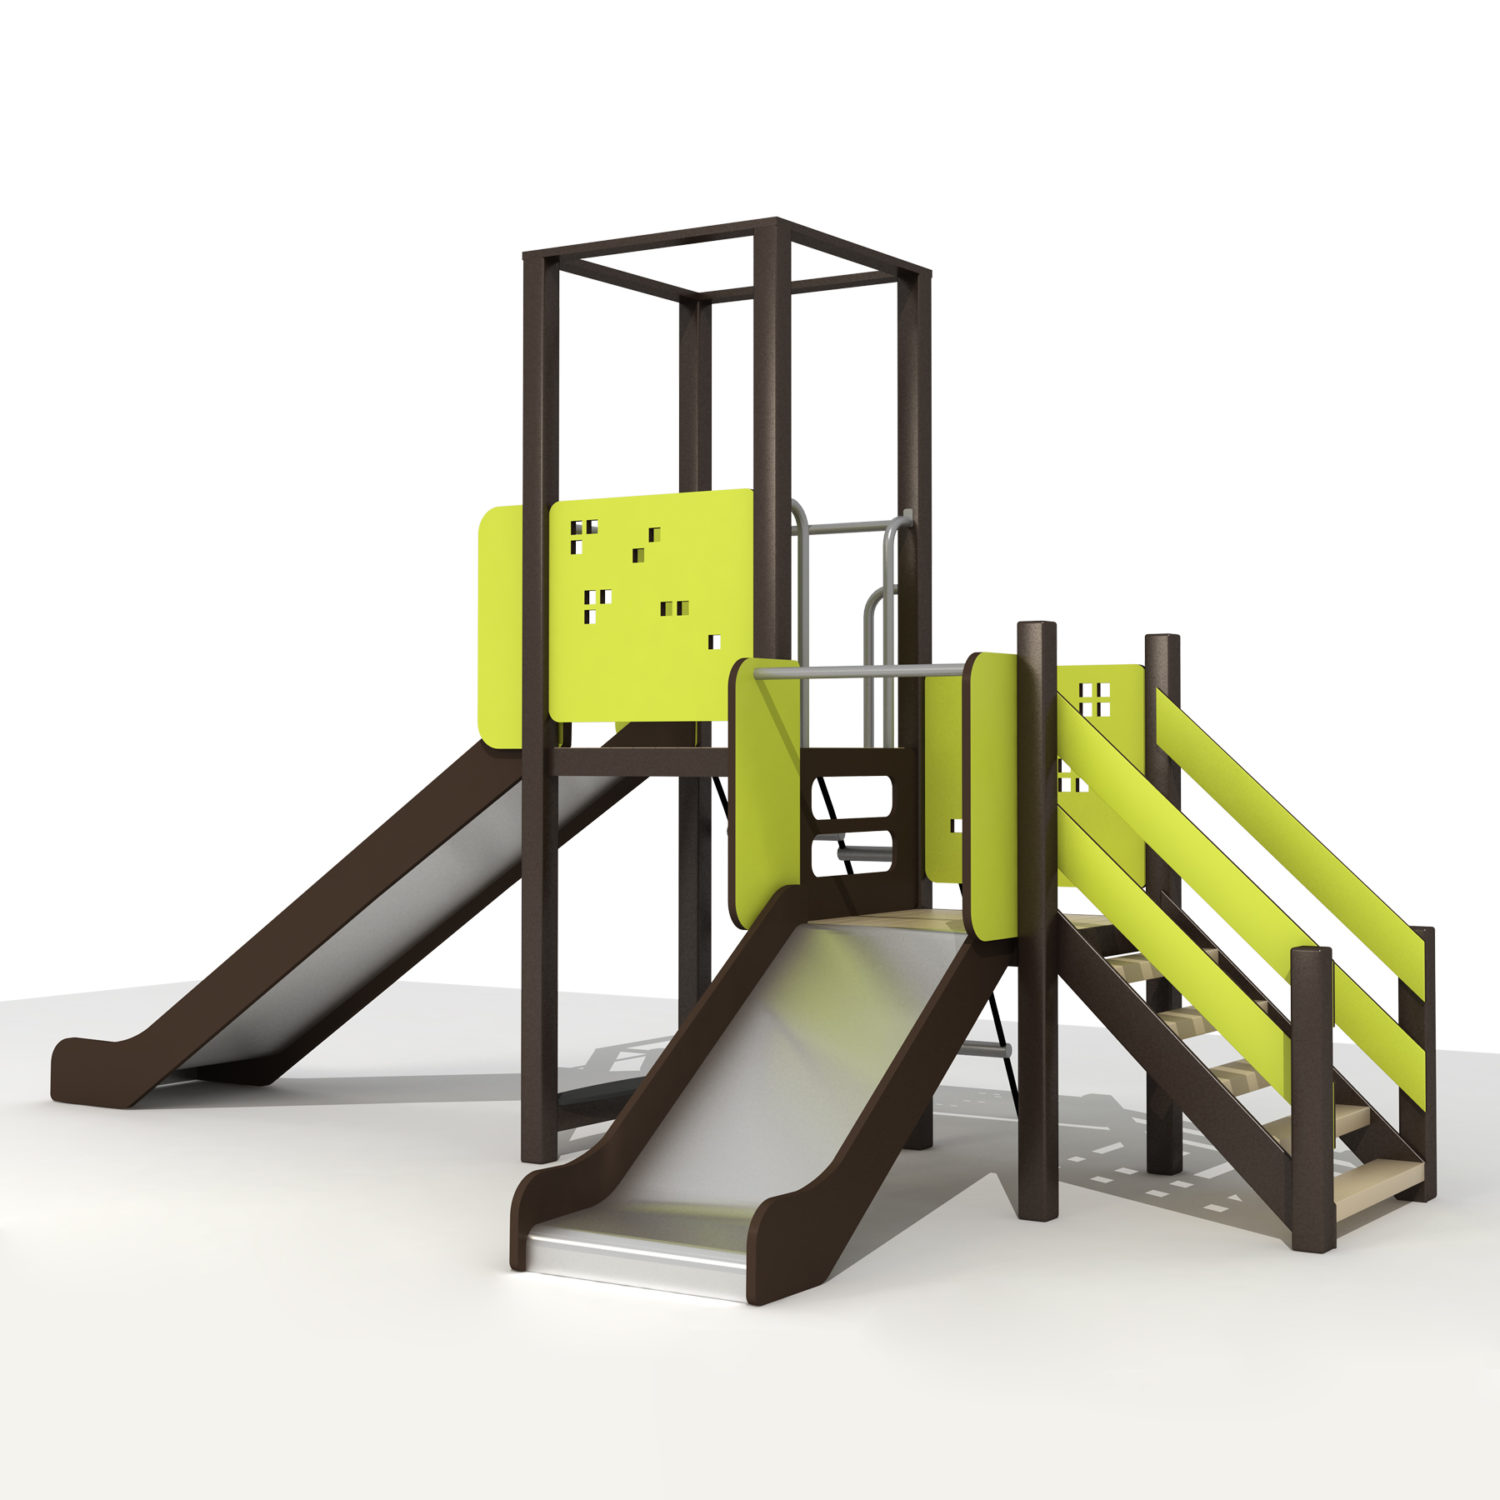 Wood Playground S1802 : สนามเด็กเล่นสไลด์เดอร์ 2 ทาง PRICE LEMON TREE